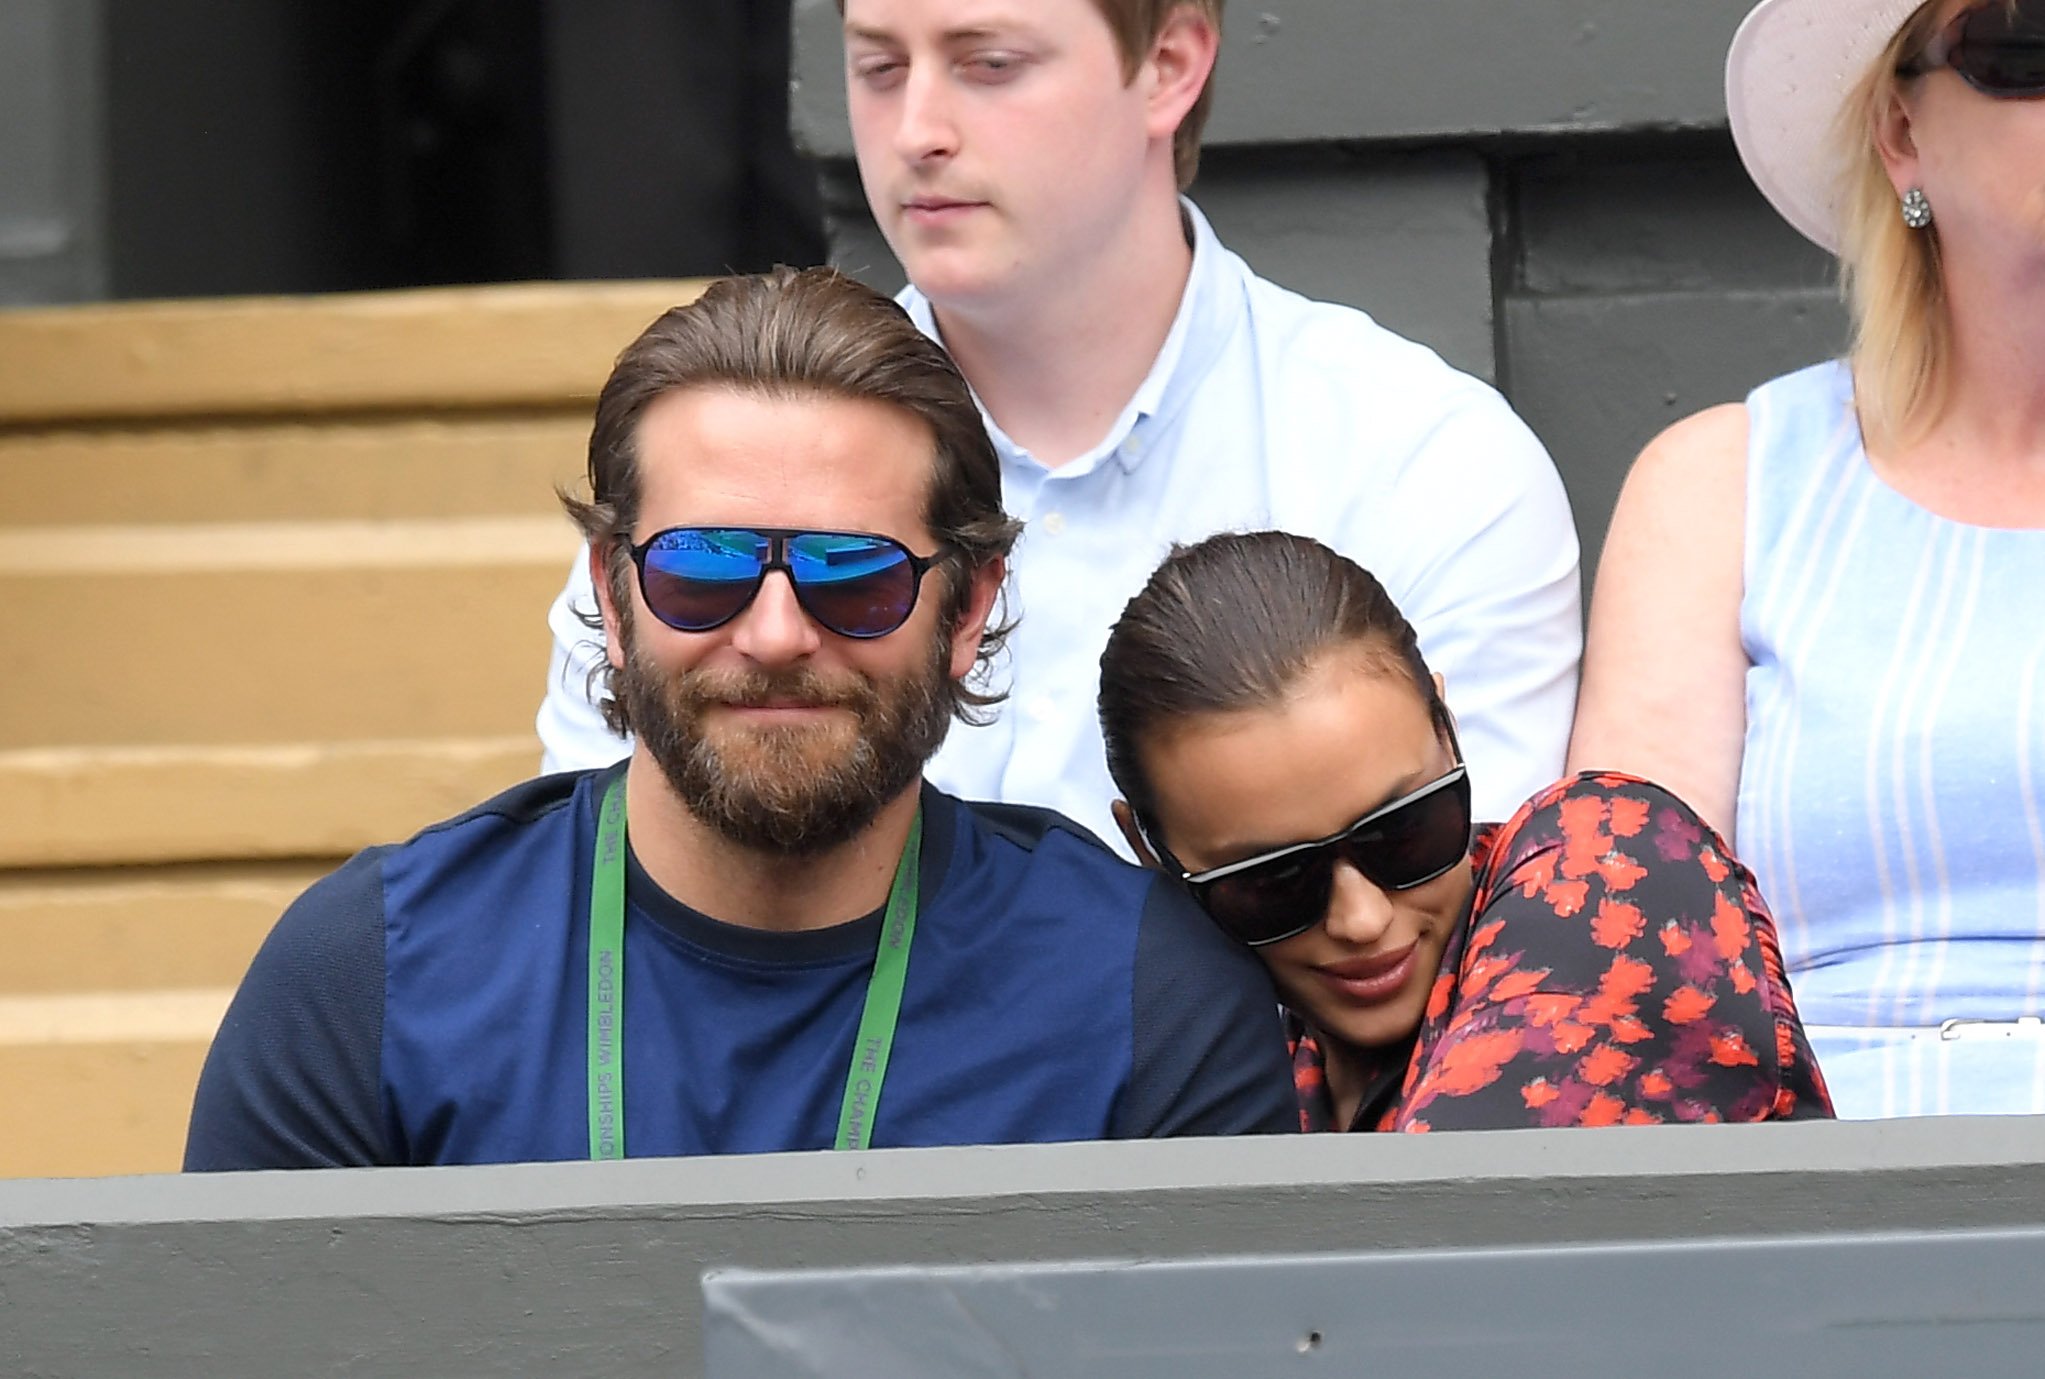 Bradley Cooper e Irina Shayk en el día once del Campeonato de Tenis de Wimbledon en Wimbledon, el 8 de julio de 2016 en Londres, Inglaterra. | Foto: Getty Images